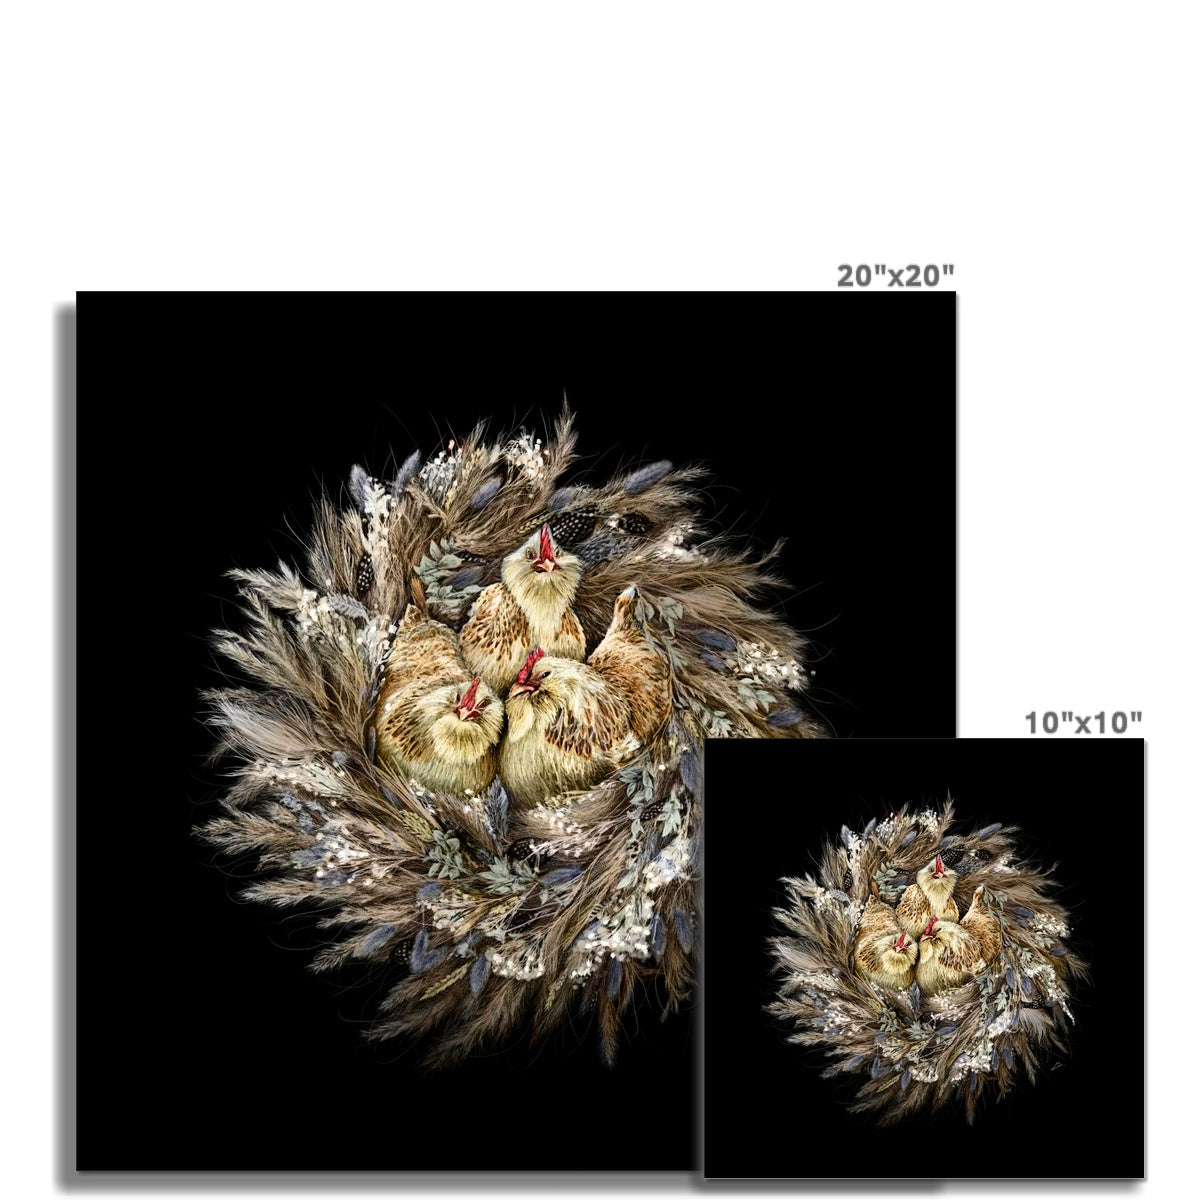 Flora & Fauna - Three French Hens